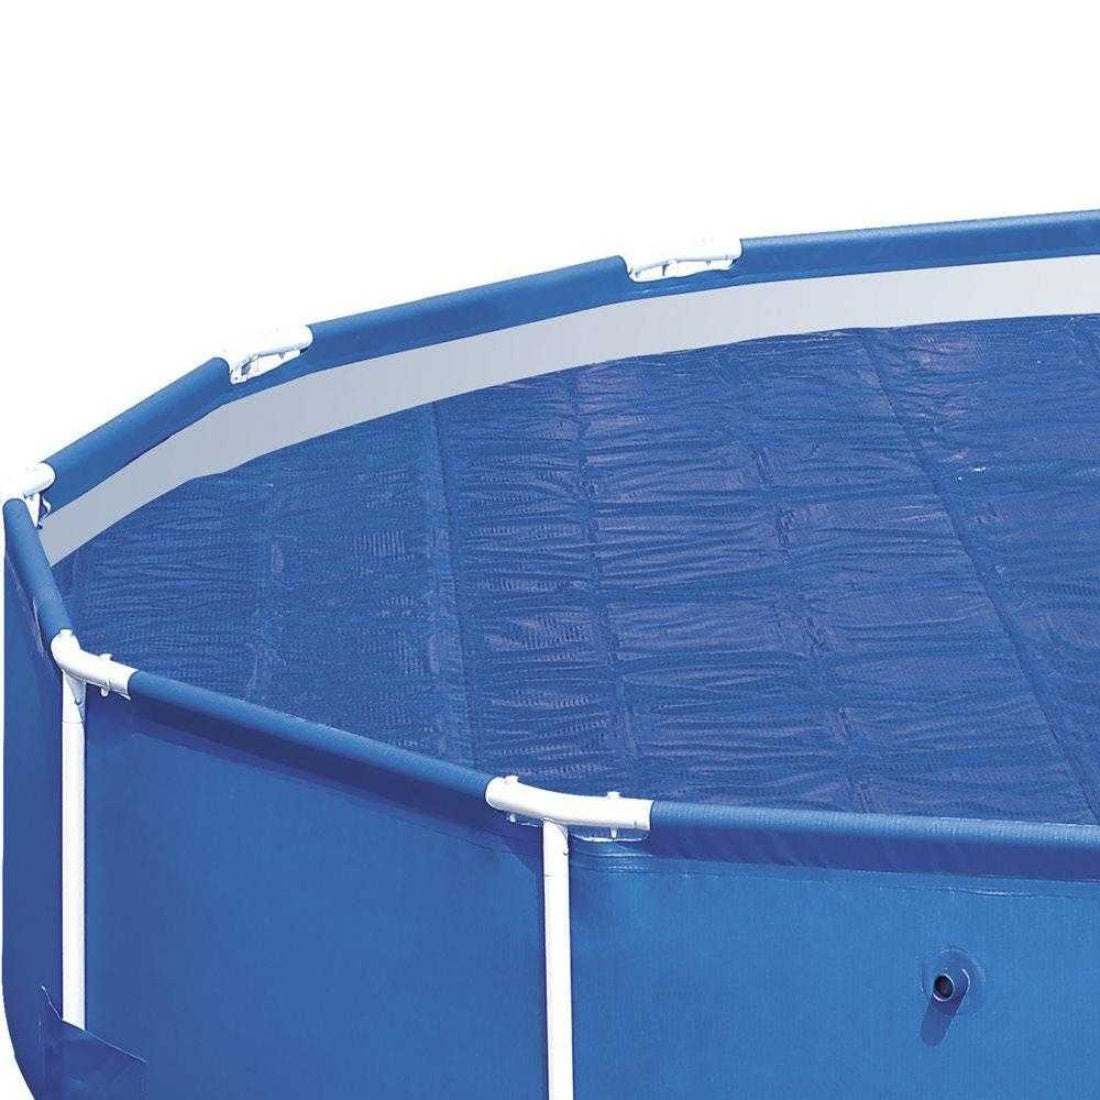 Bestway Swimming Pool Cover 3.5m Diameter  UV Resistant - Fits 56515 & 58293 & 56242